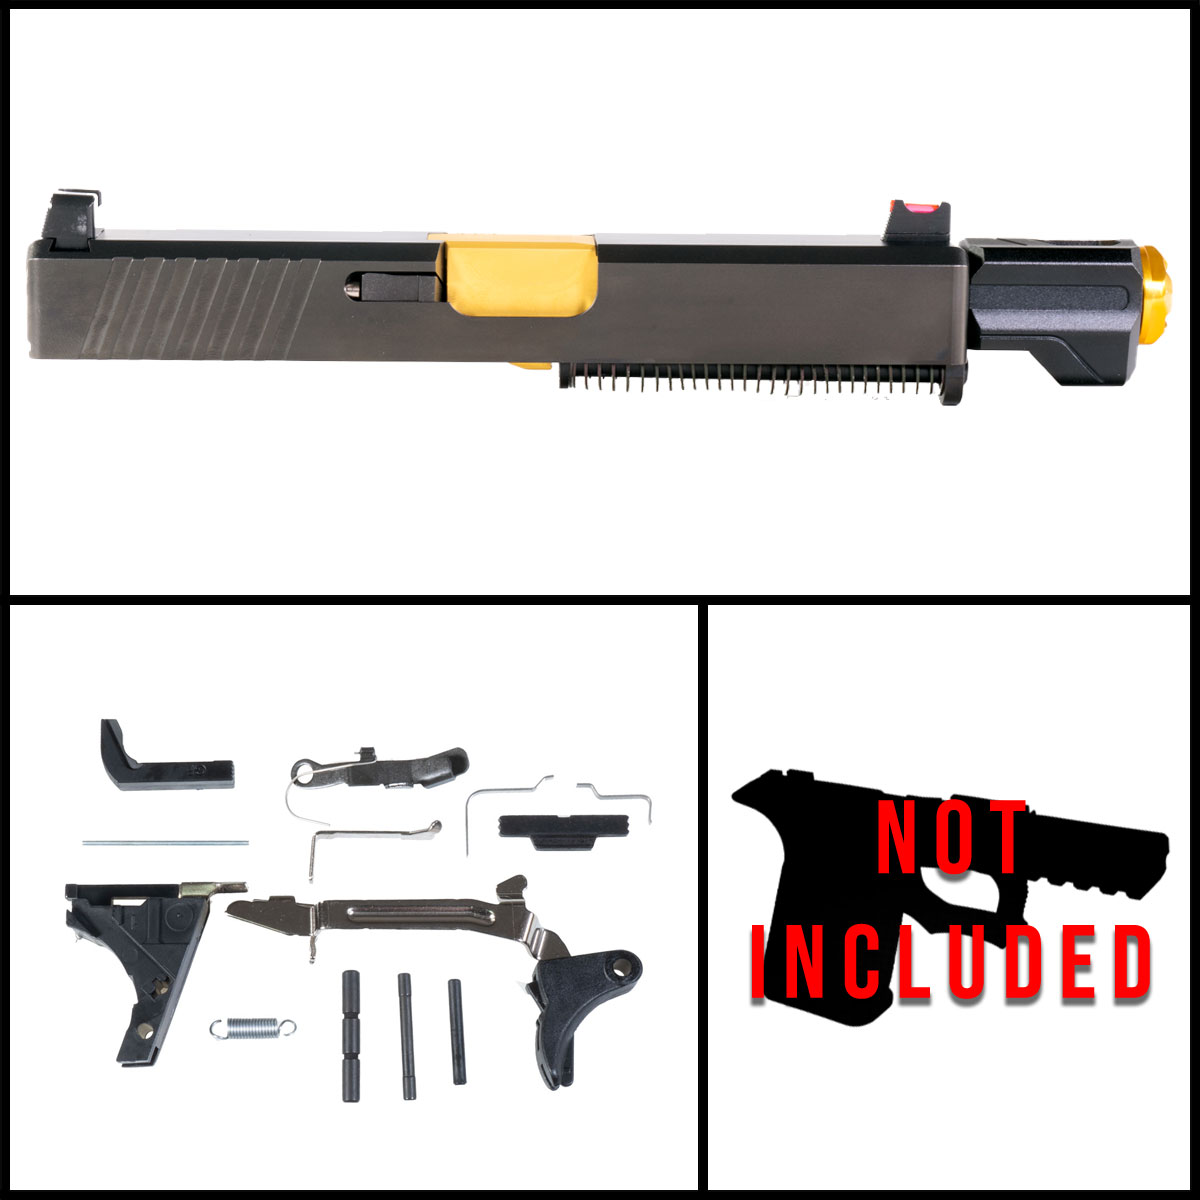 DTT 'Geschoss w/ Tyrant Designs Compensator' 9mm Full Pistol Build Kit (Everything Minus Frame) - Glock 19 Gen 1-3 Compatible